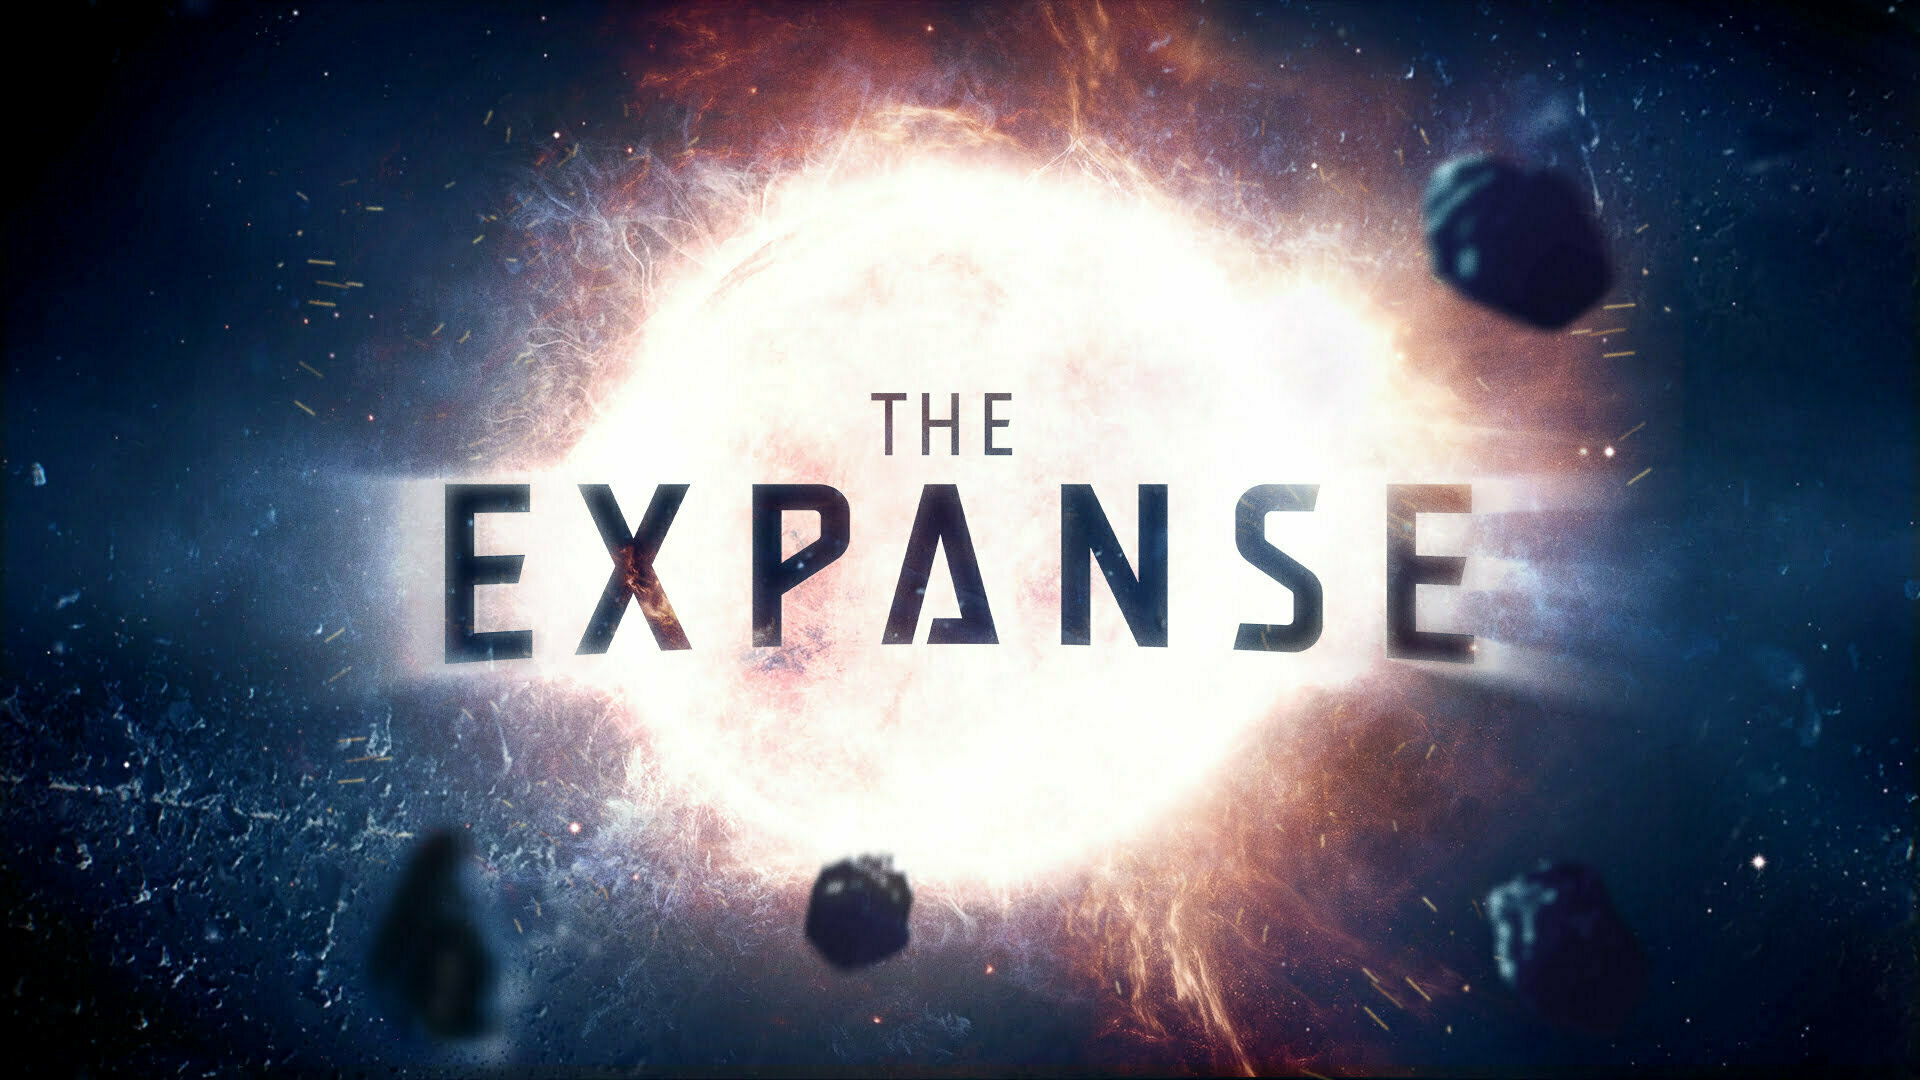 TheExpanse